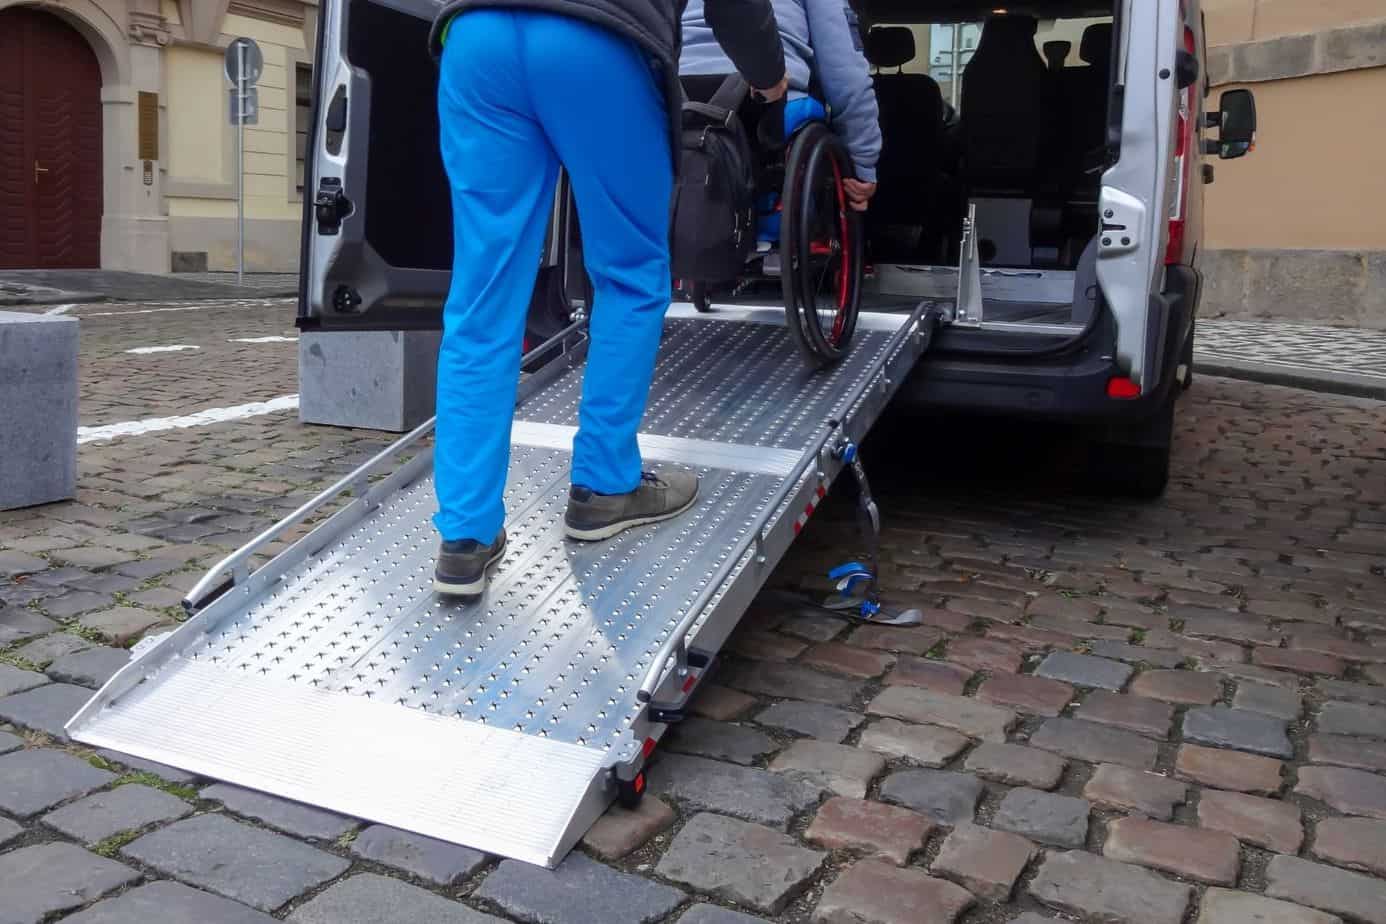 pushing wheelchair inside the van